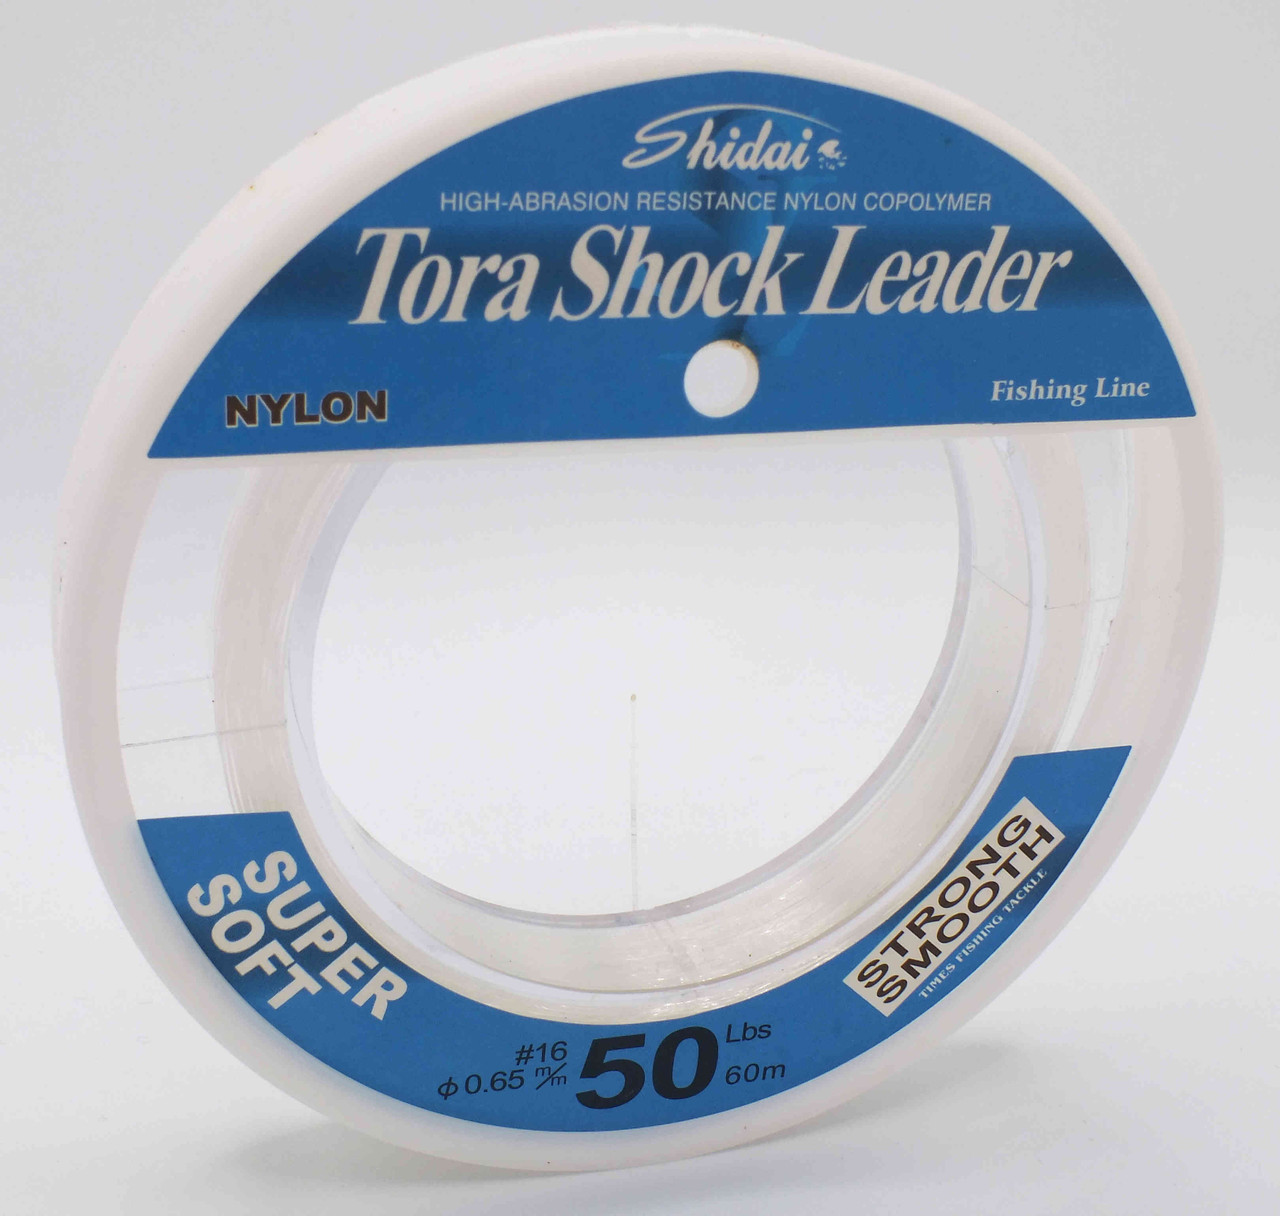 Tora Nylon Copolymer Leader Mono Fishing Line 50lb 60m - Wholesale